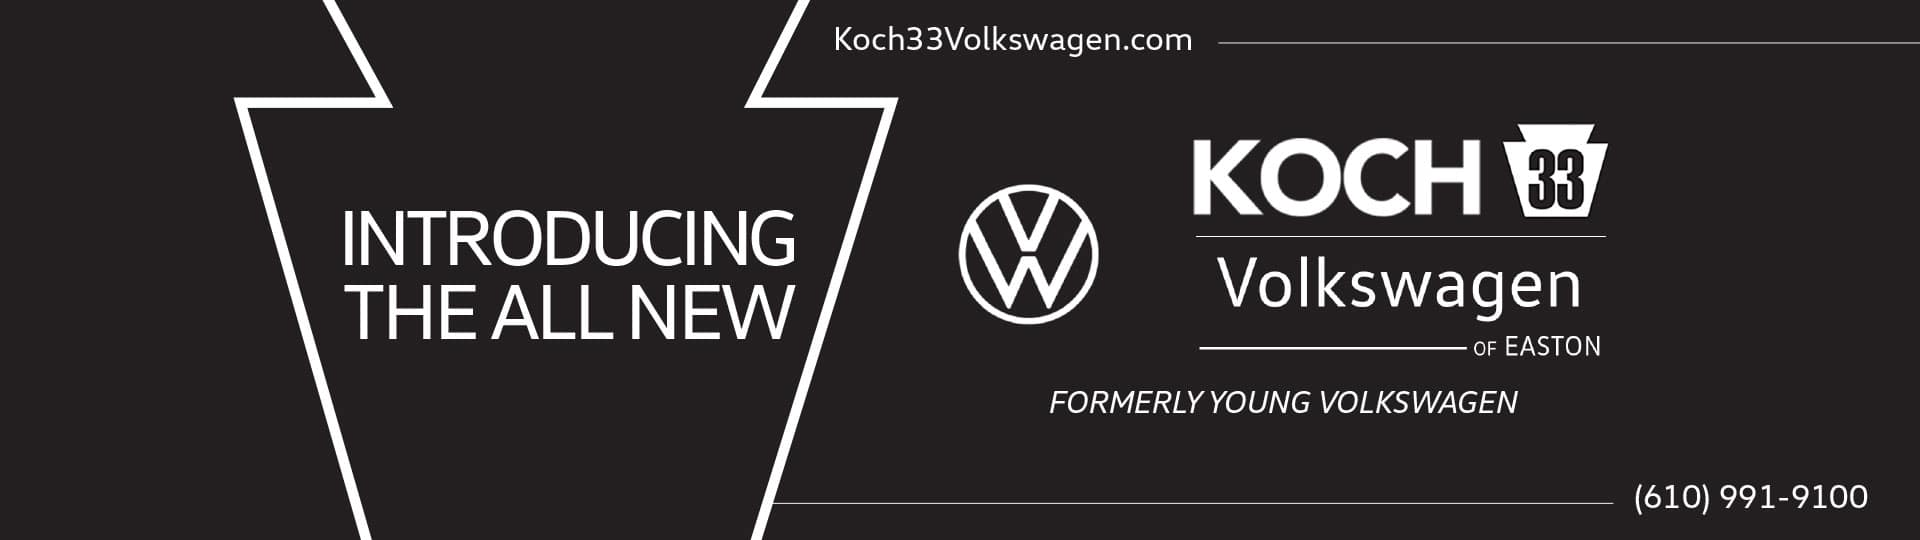 New Koch 33 Volkswagen of Easton